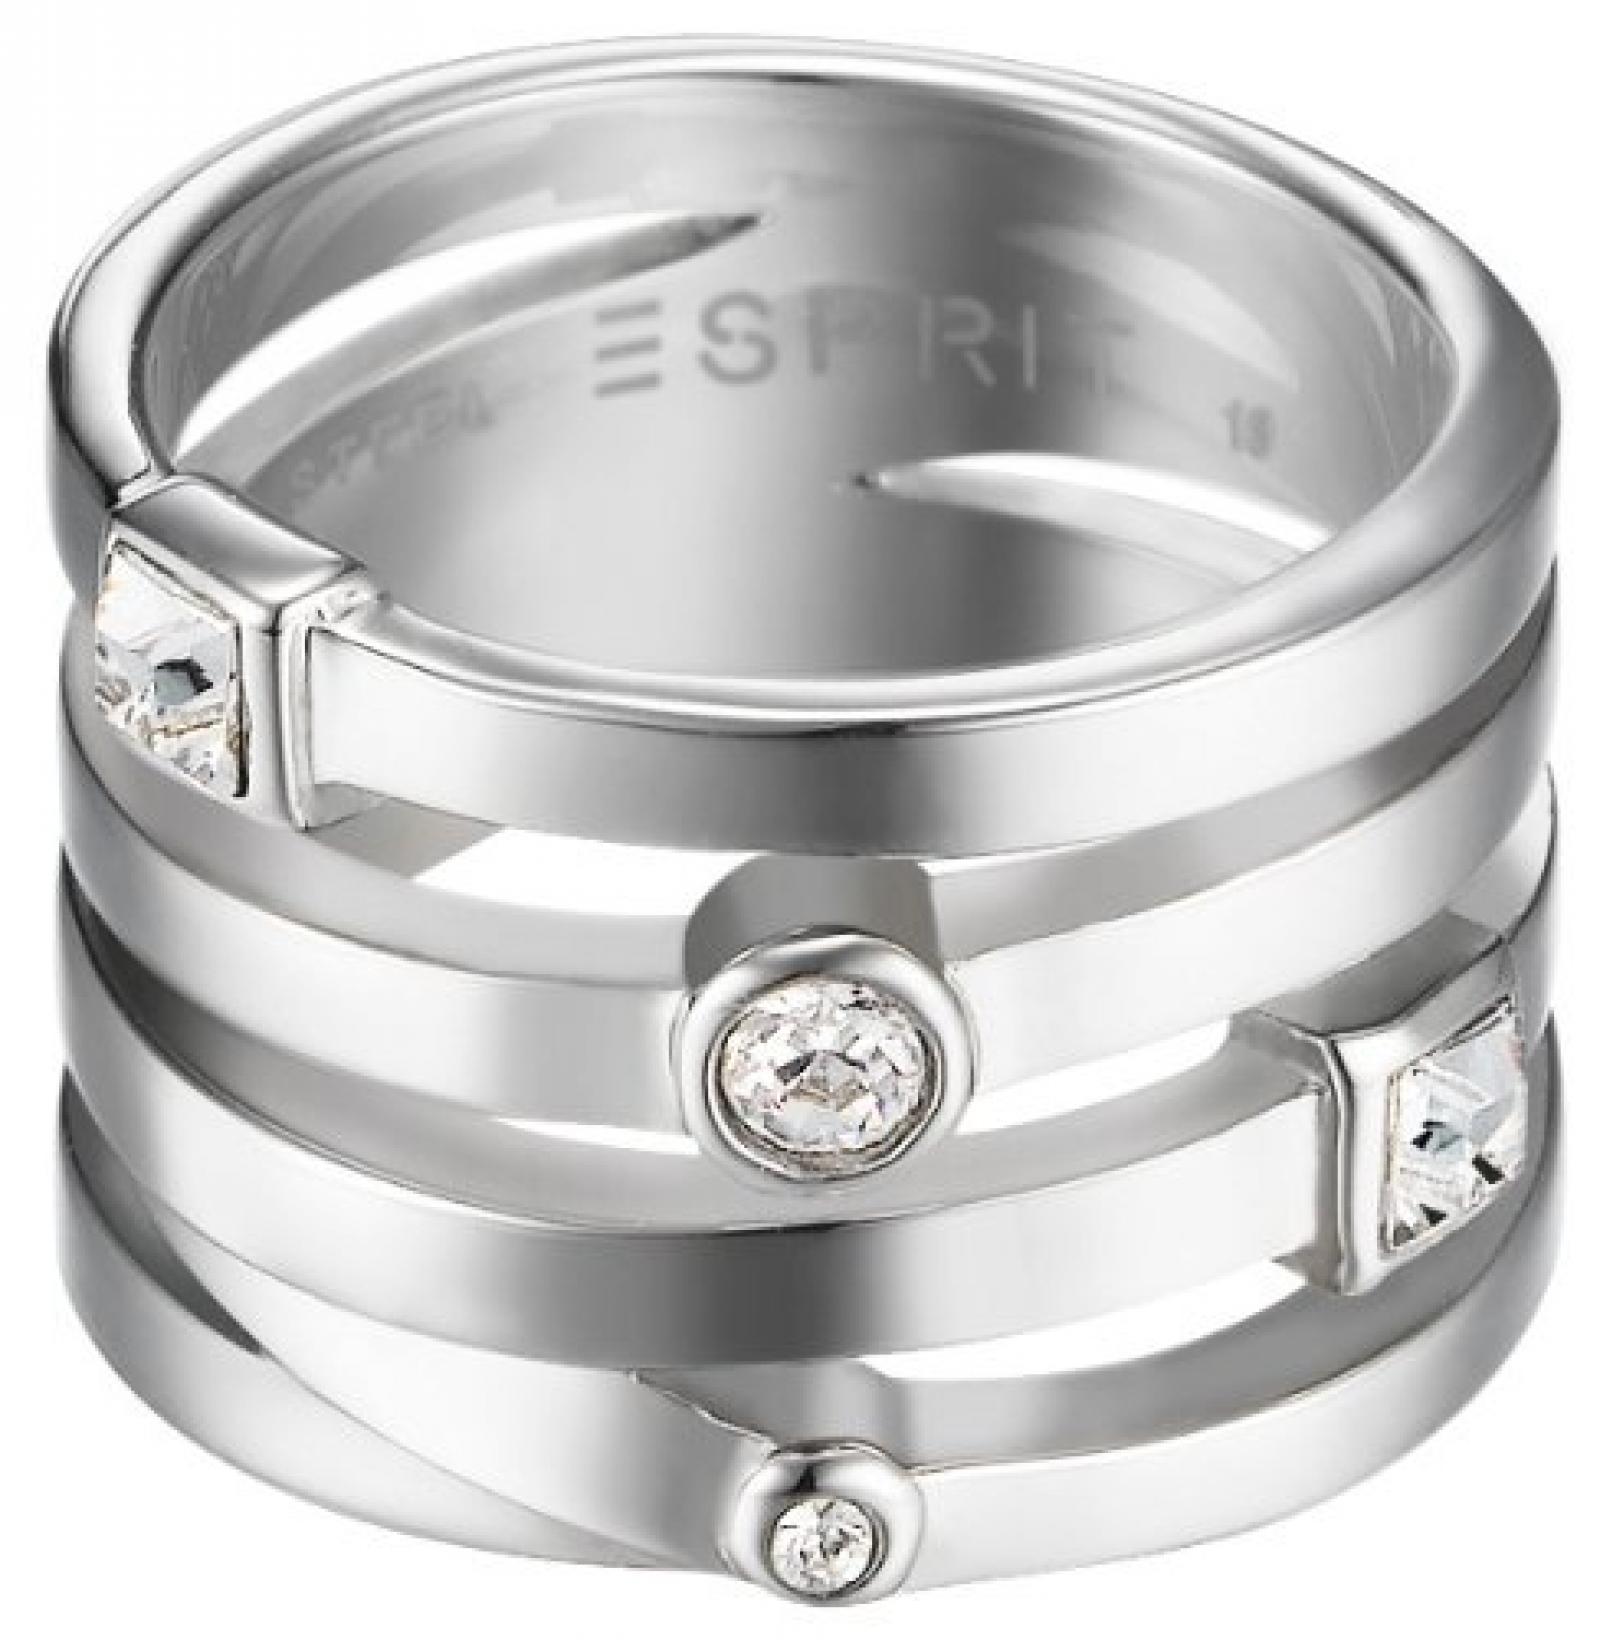 Esprit Damen-Ring Edelstahl rhodiniert Kristall Zirkonia geometric solitaire weiß Gr.56 (17.8) ESRG11575A180 